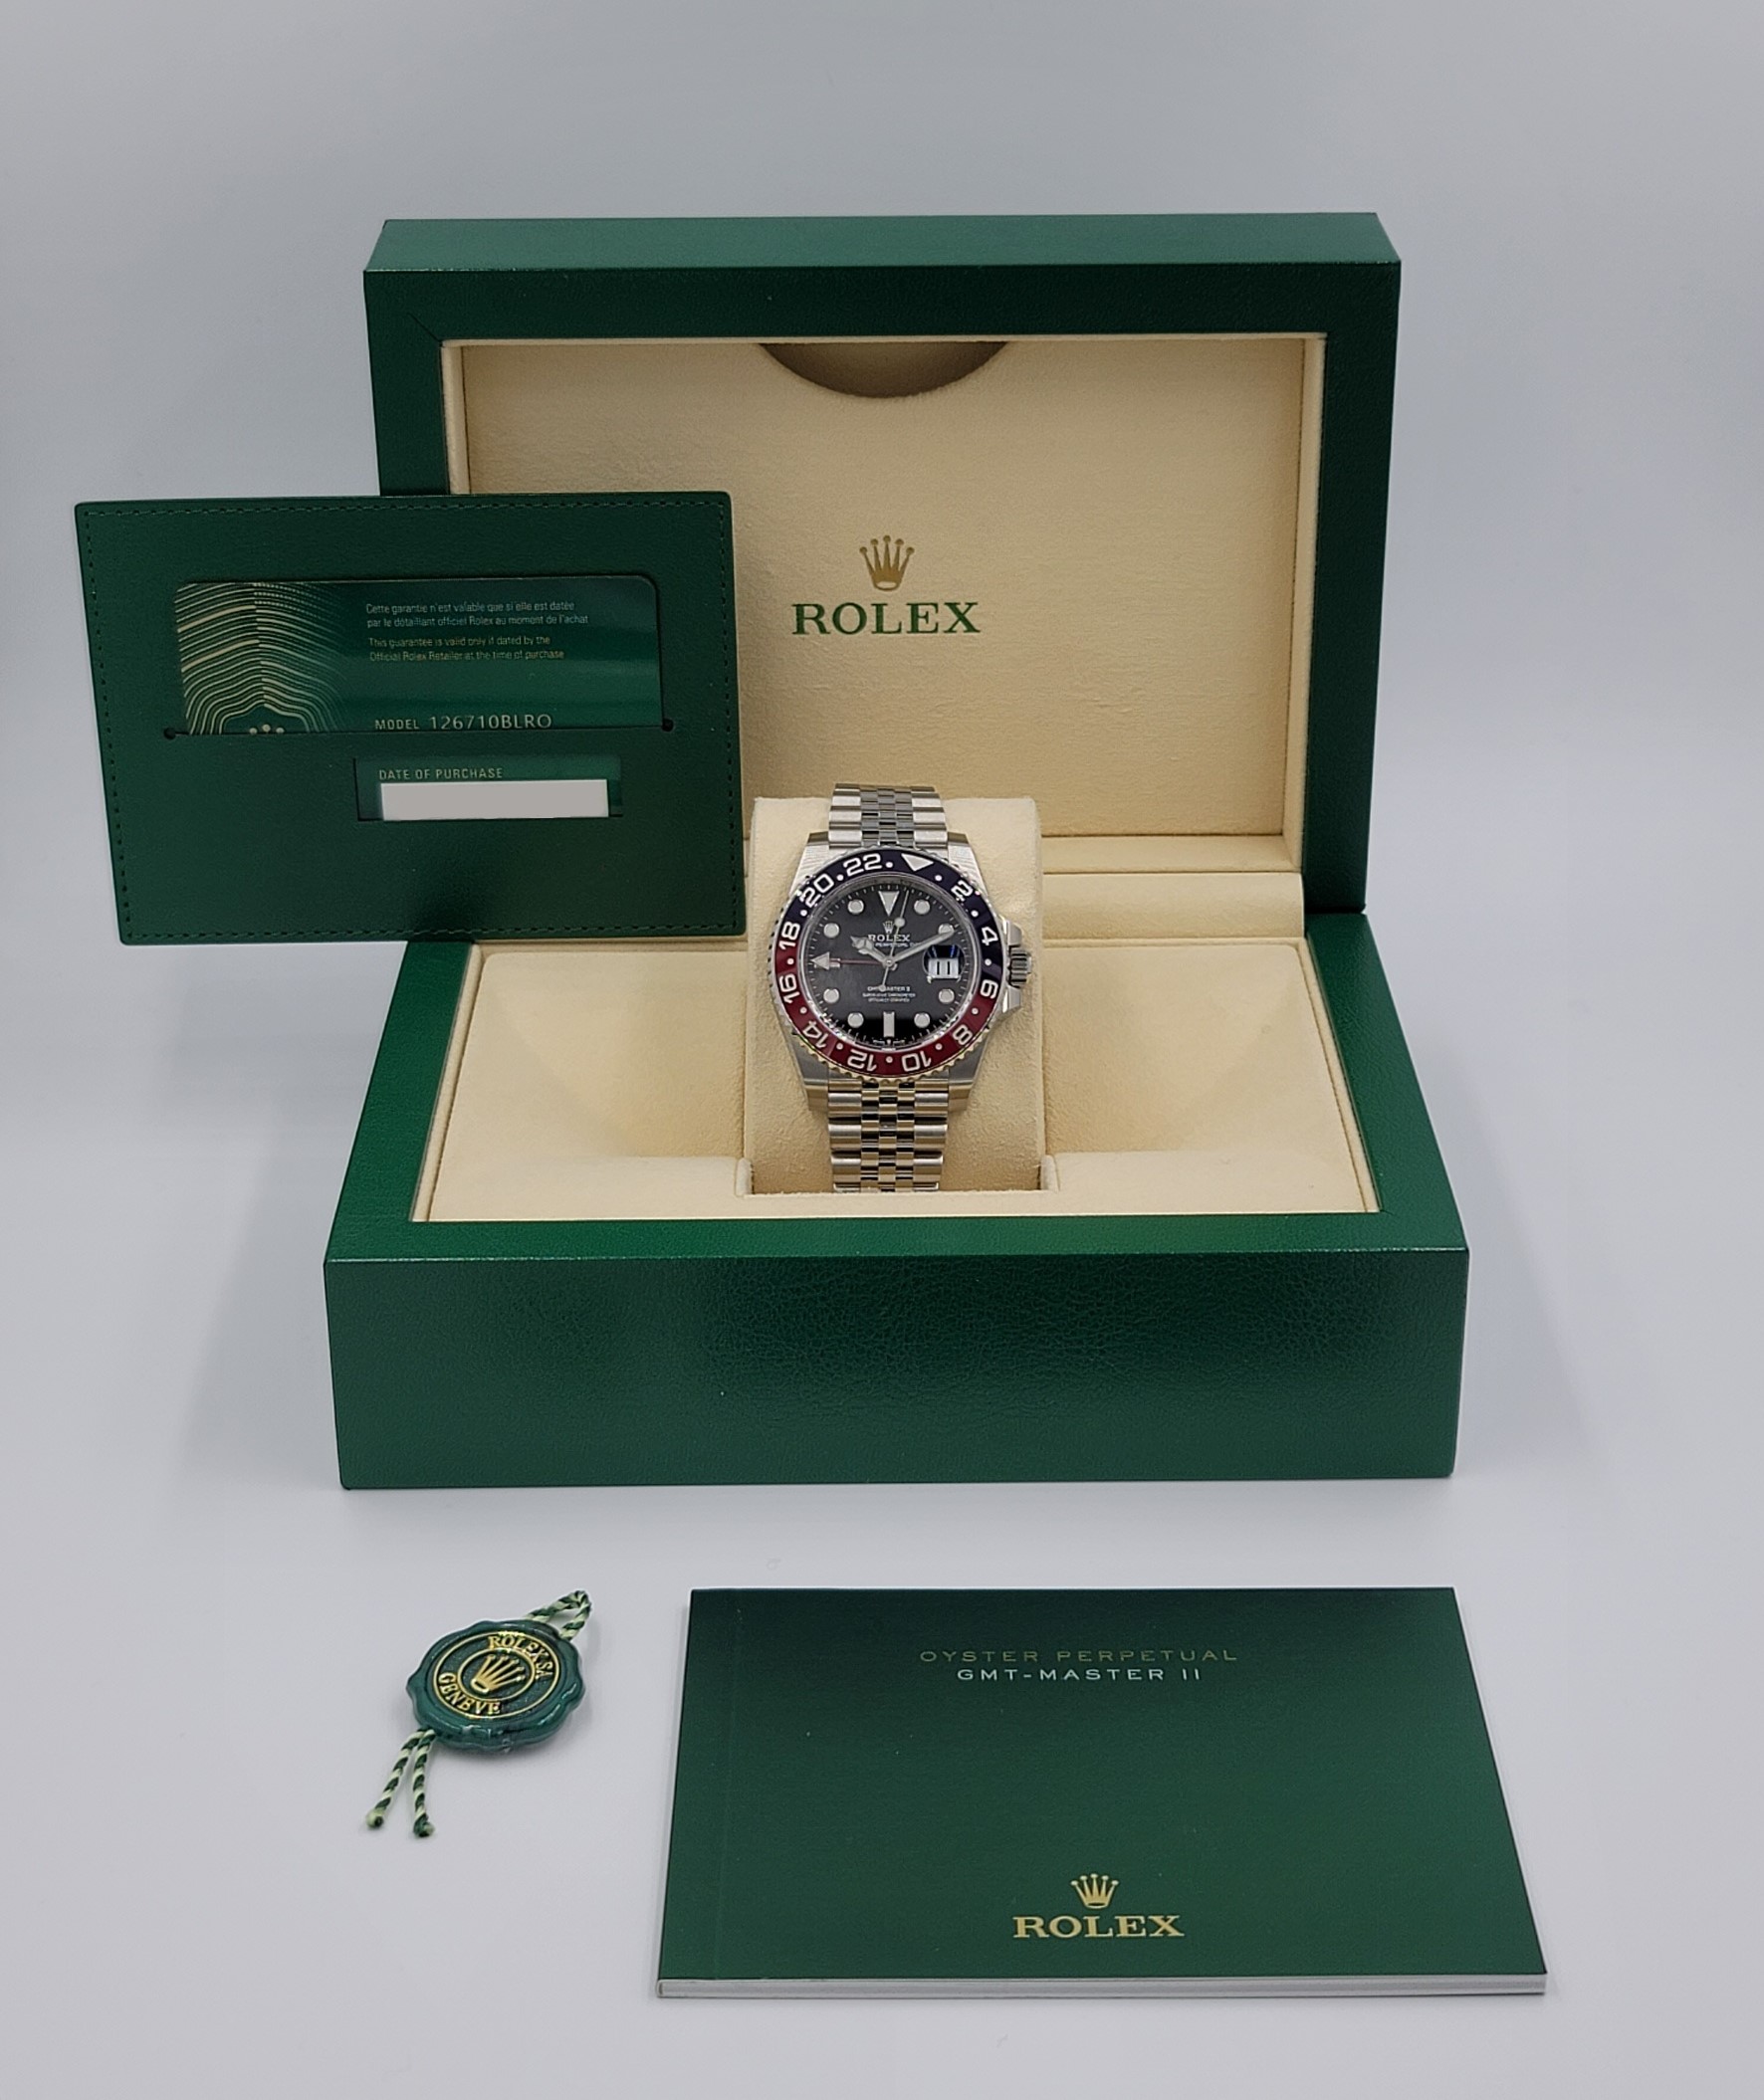 Triumferende blandt Eventyrer Rolex Gmt Master II 40mm “PEPSI” Ref.126710BLRO Oystersteel With Jubilee  Band - Lxy Boutique